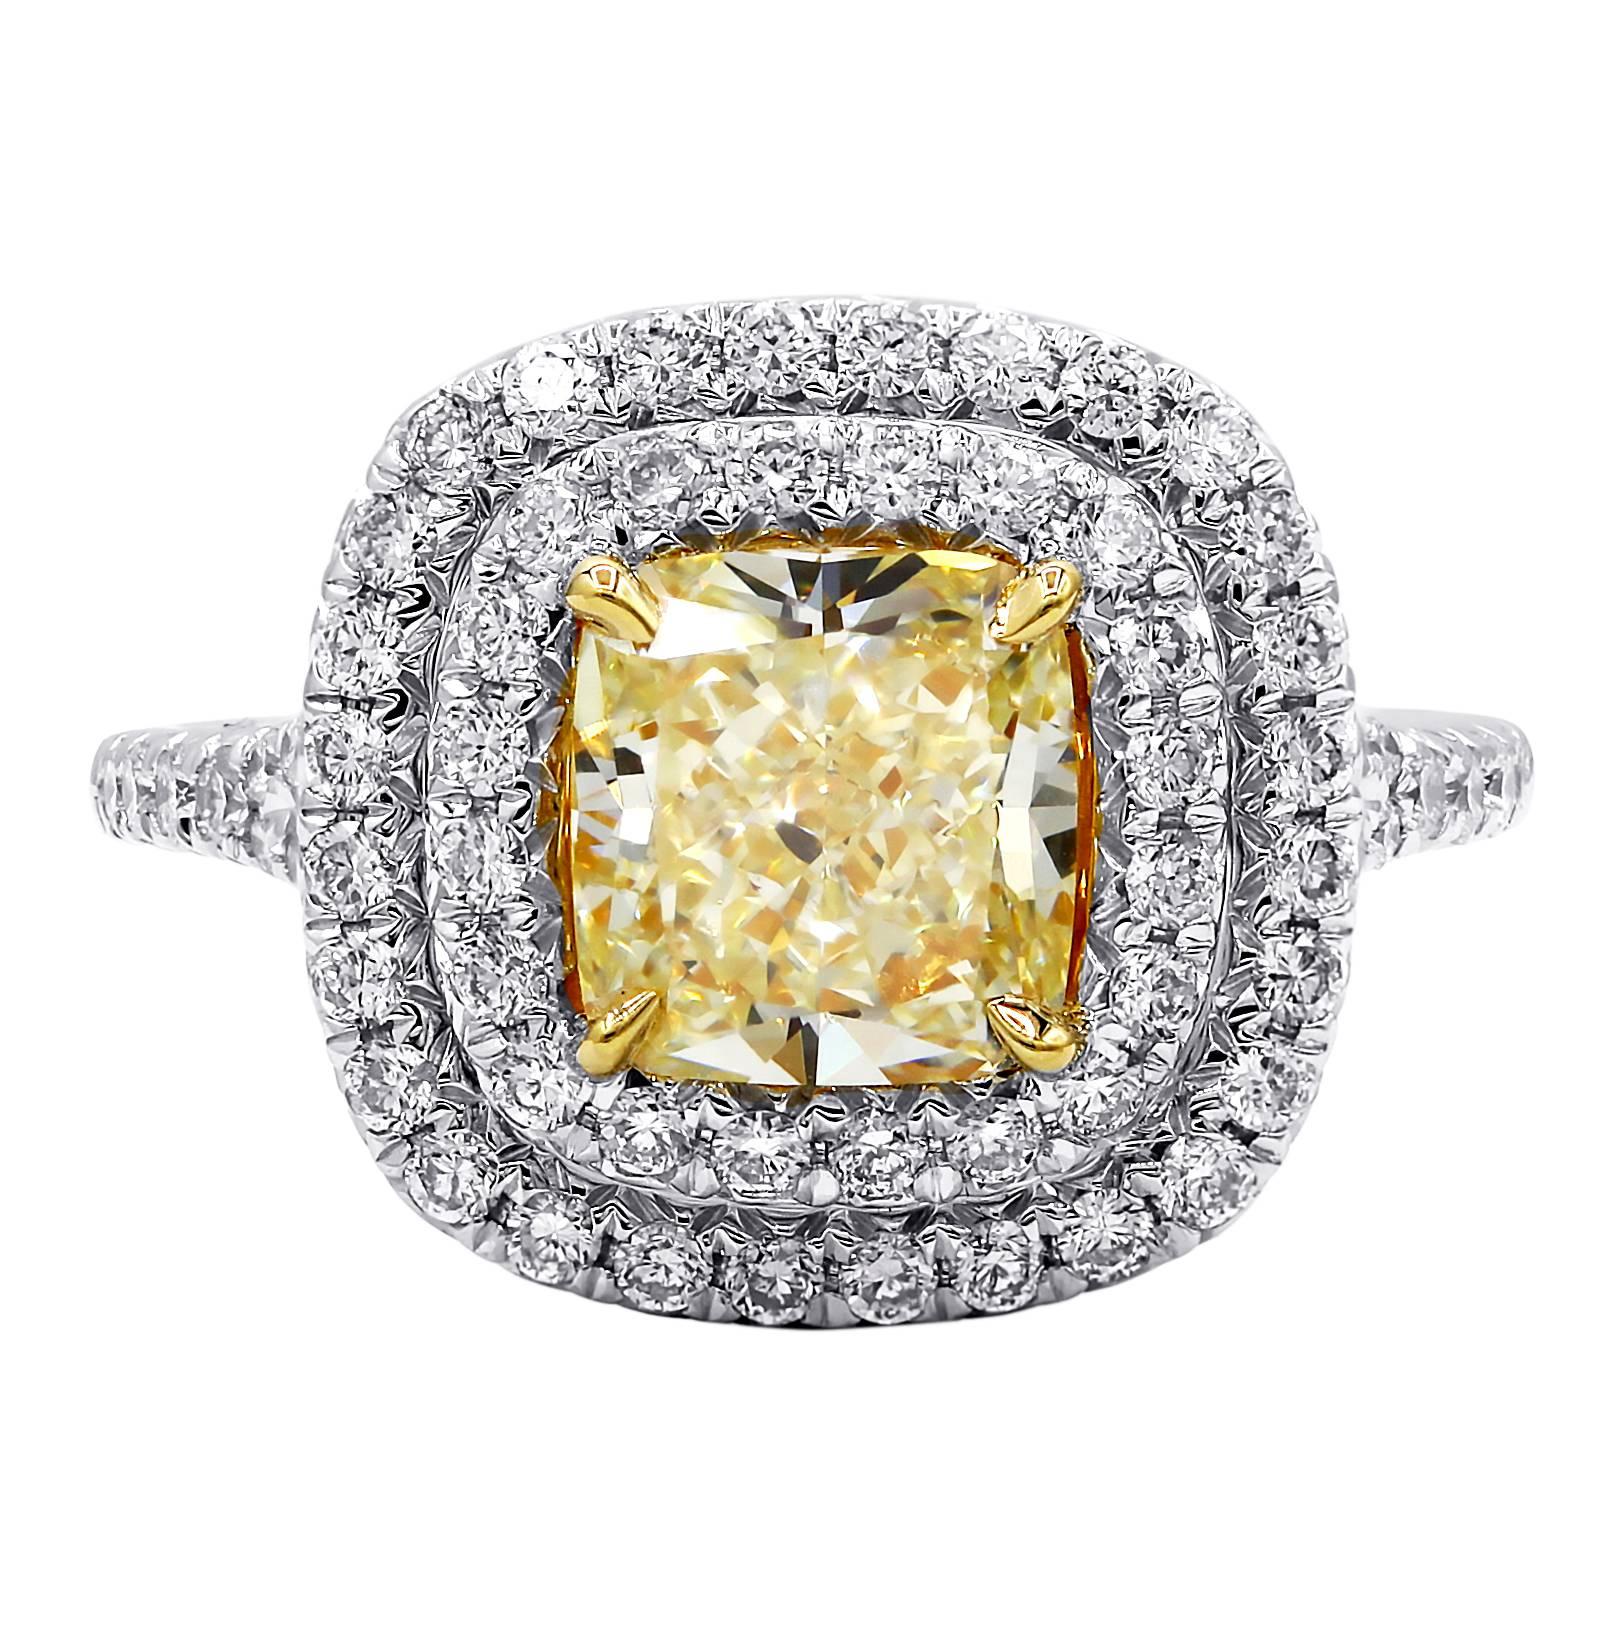 GIA Certified 2.00 Carat Fancy Yellow Diamond Ring